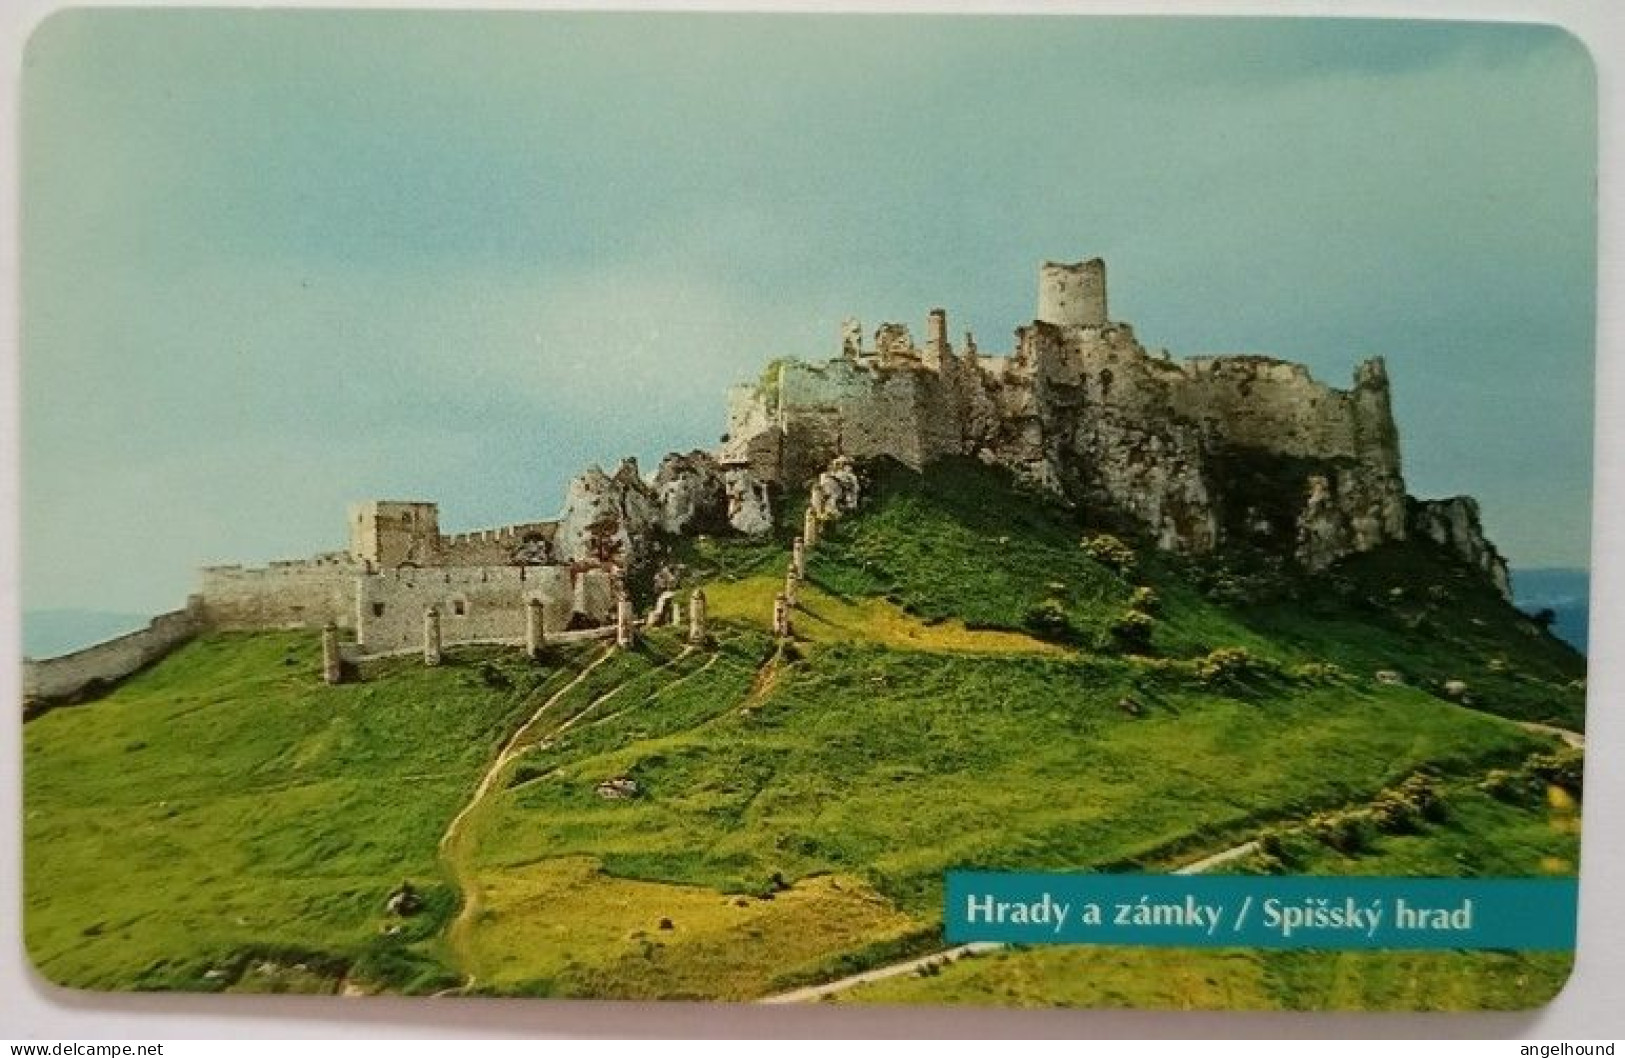 Slovakia 50 Units Chip Card - Spissky Hrad / Spis Castle - Slovakia